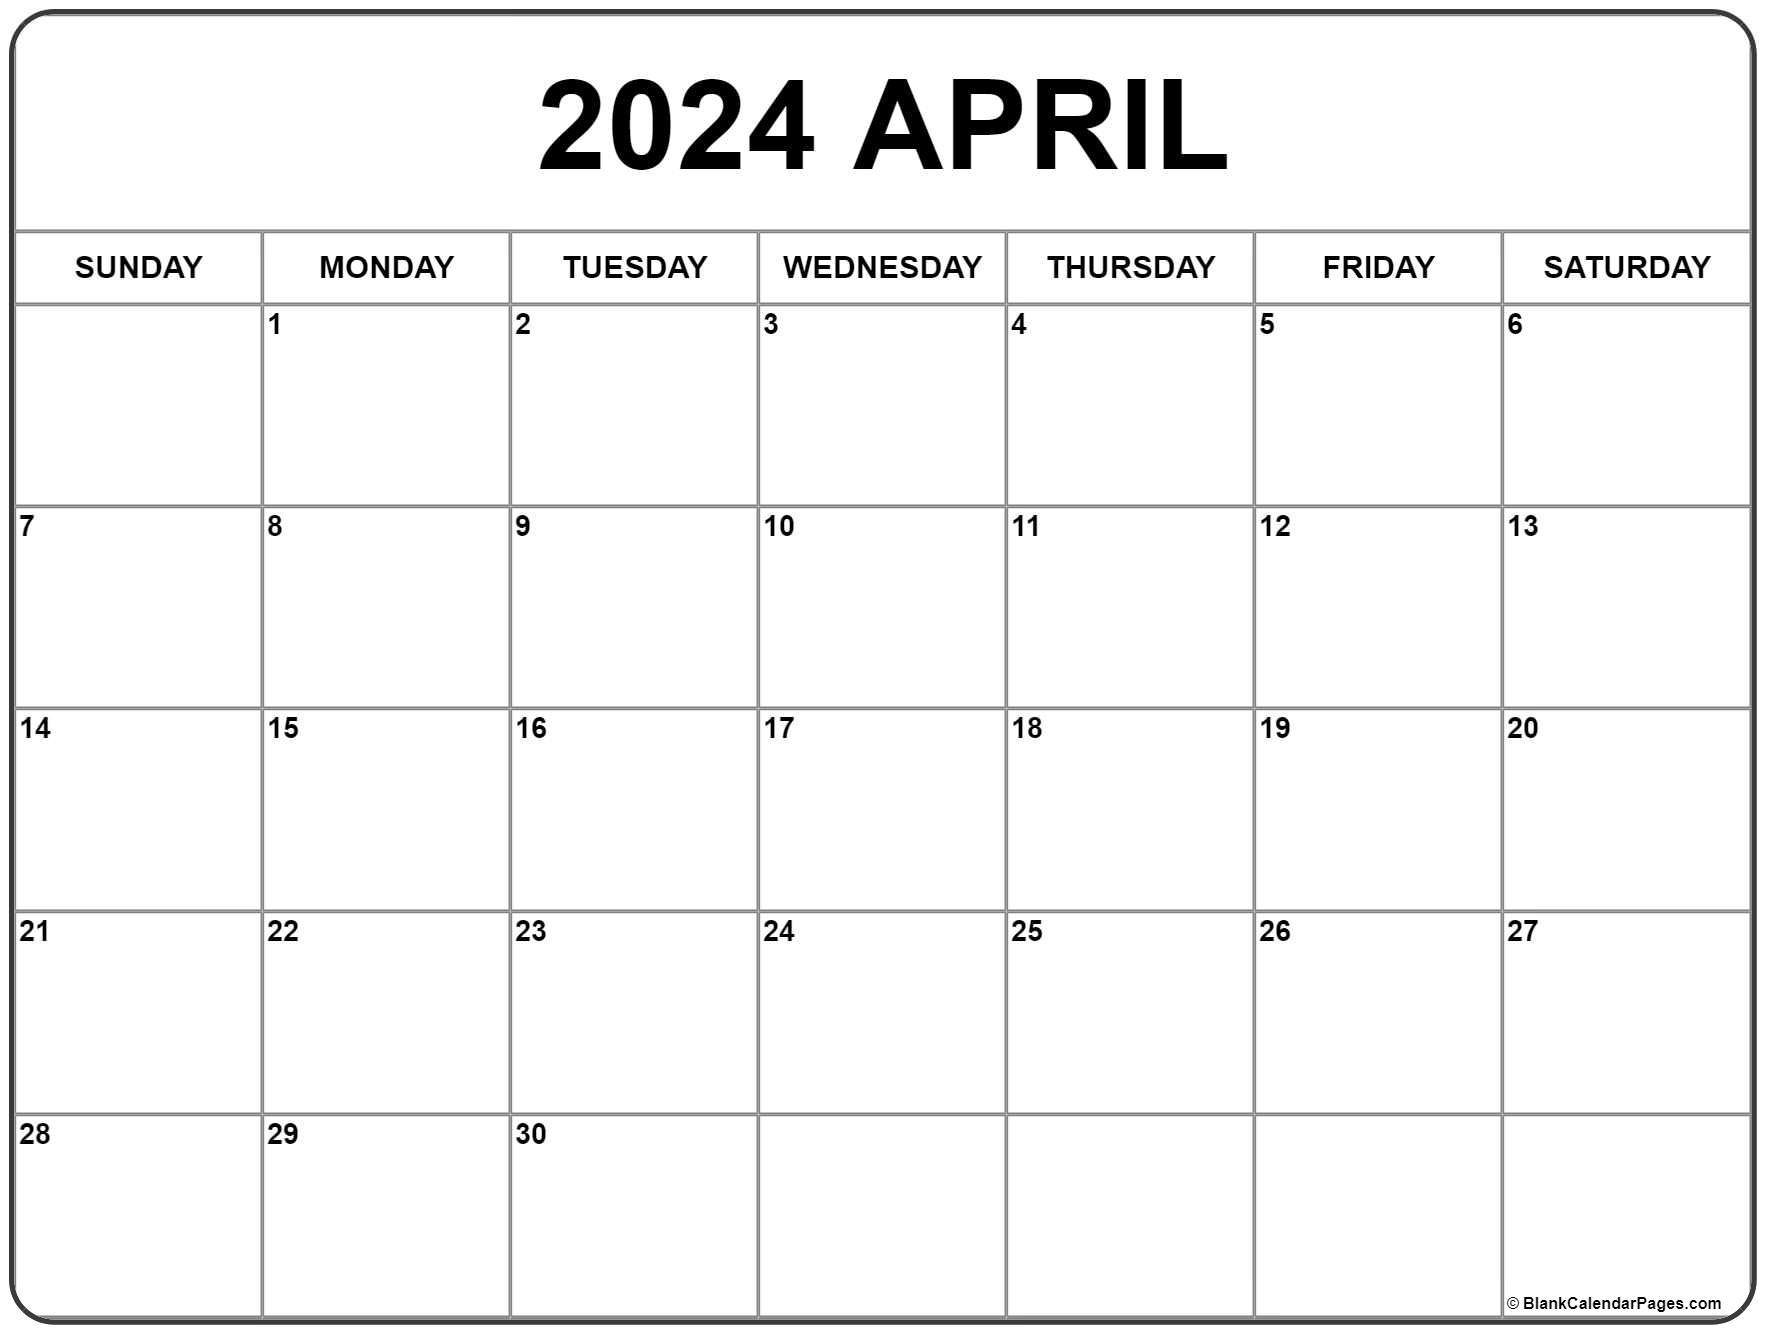 April 2022 calendar free printable calendar templates